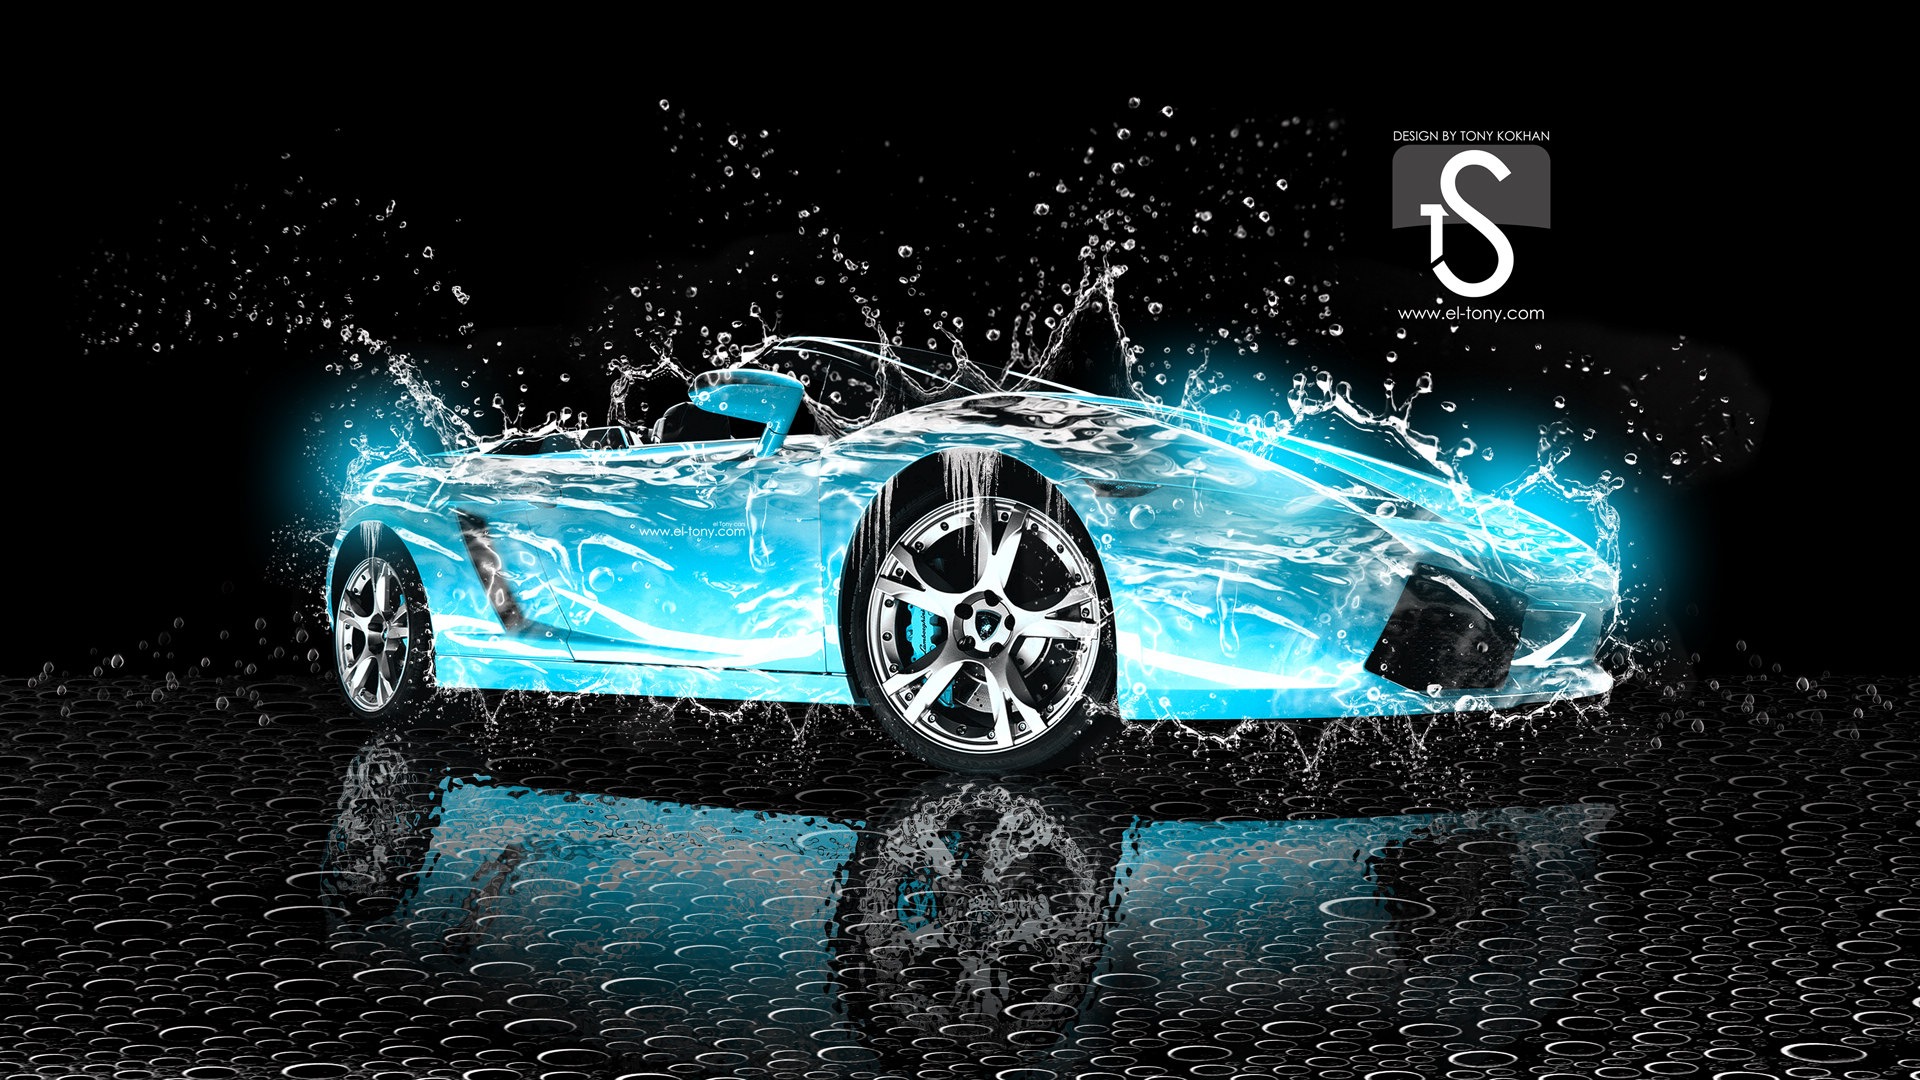 Water drops splash, beautiful car creative design wallpaper #22 - 1920x1080